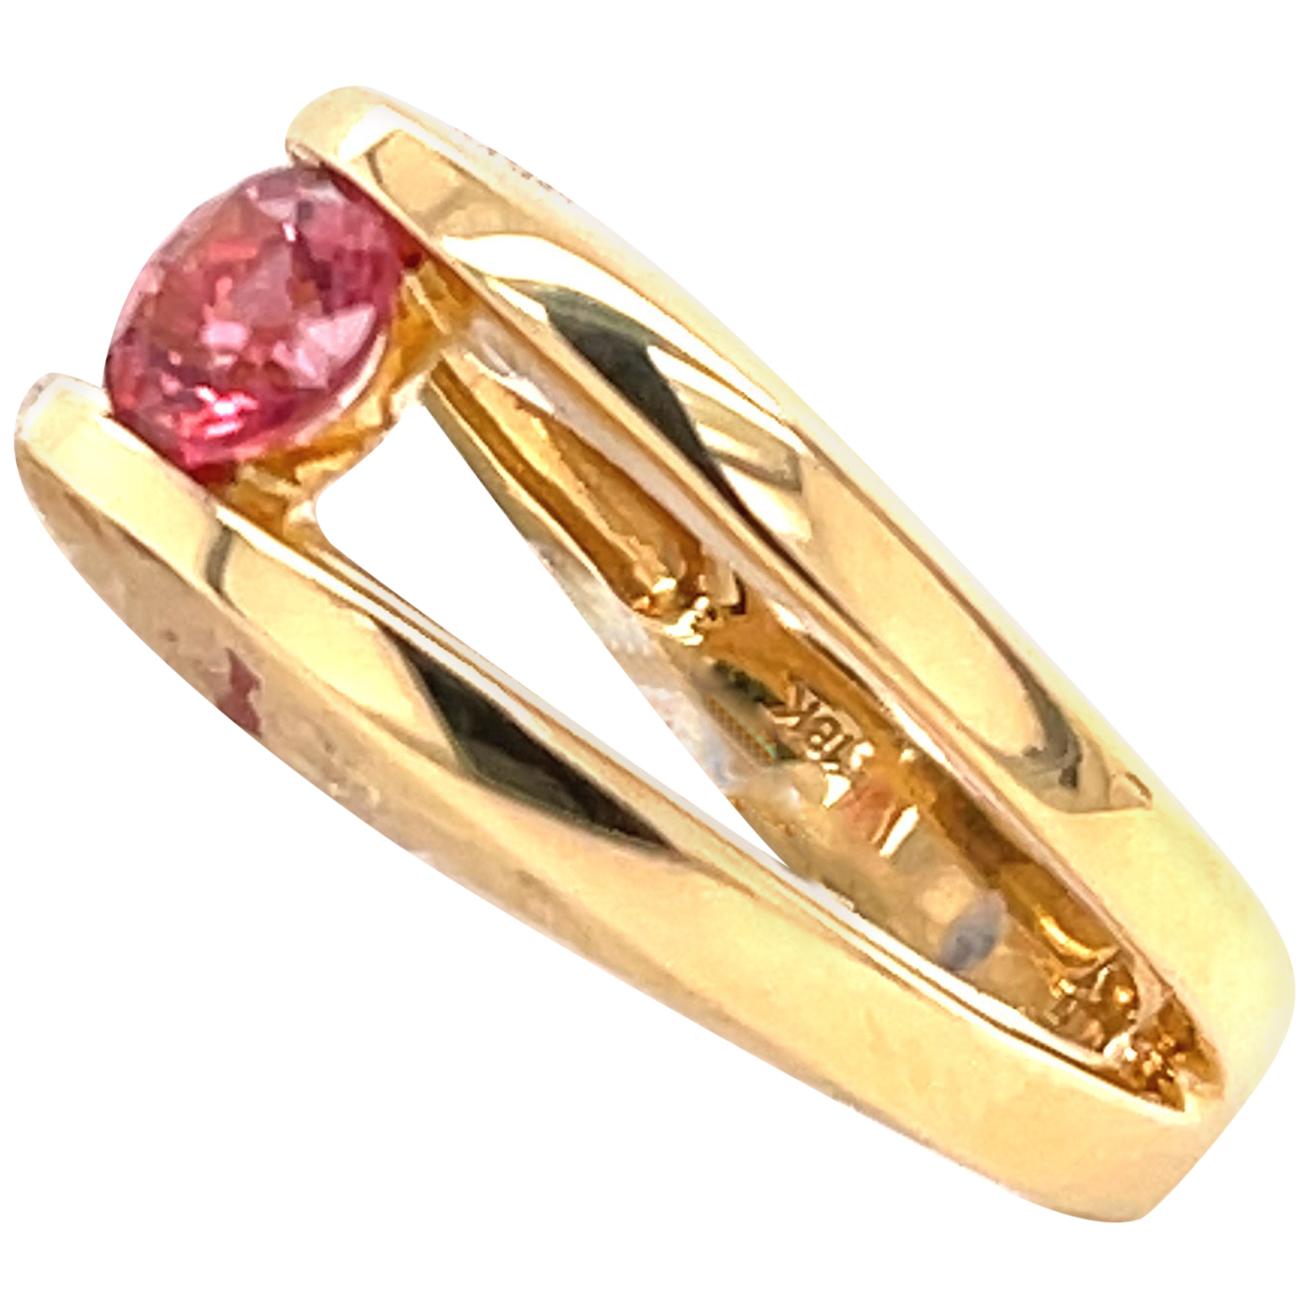 0.72 Carat Orangey-Pink Spinel and Diamond Gold Ring